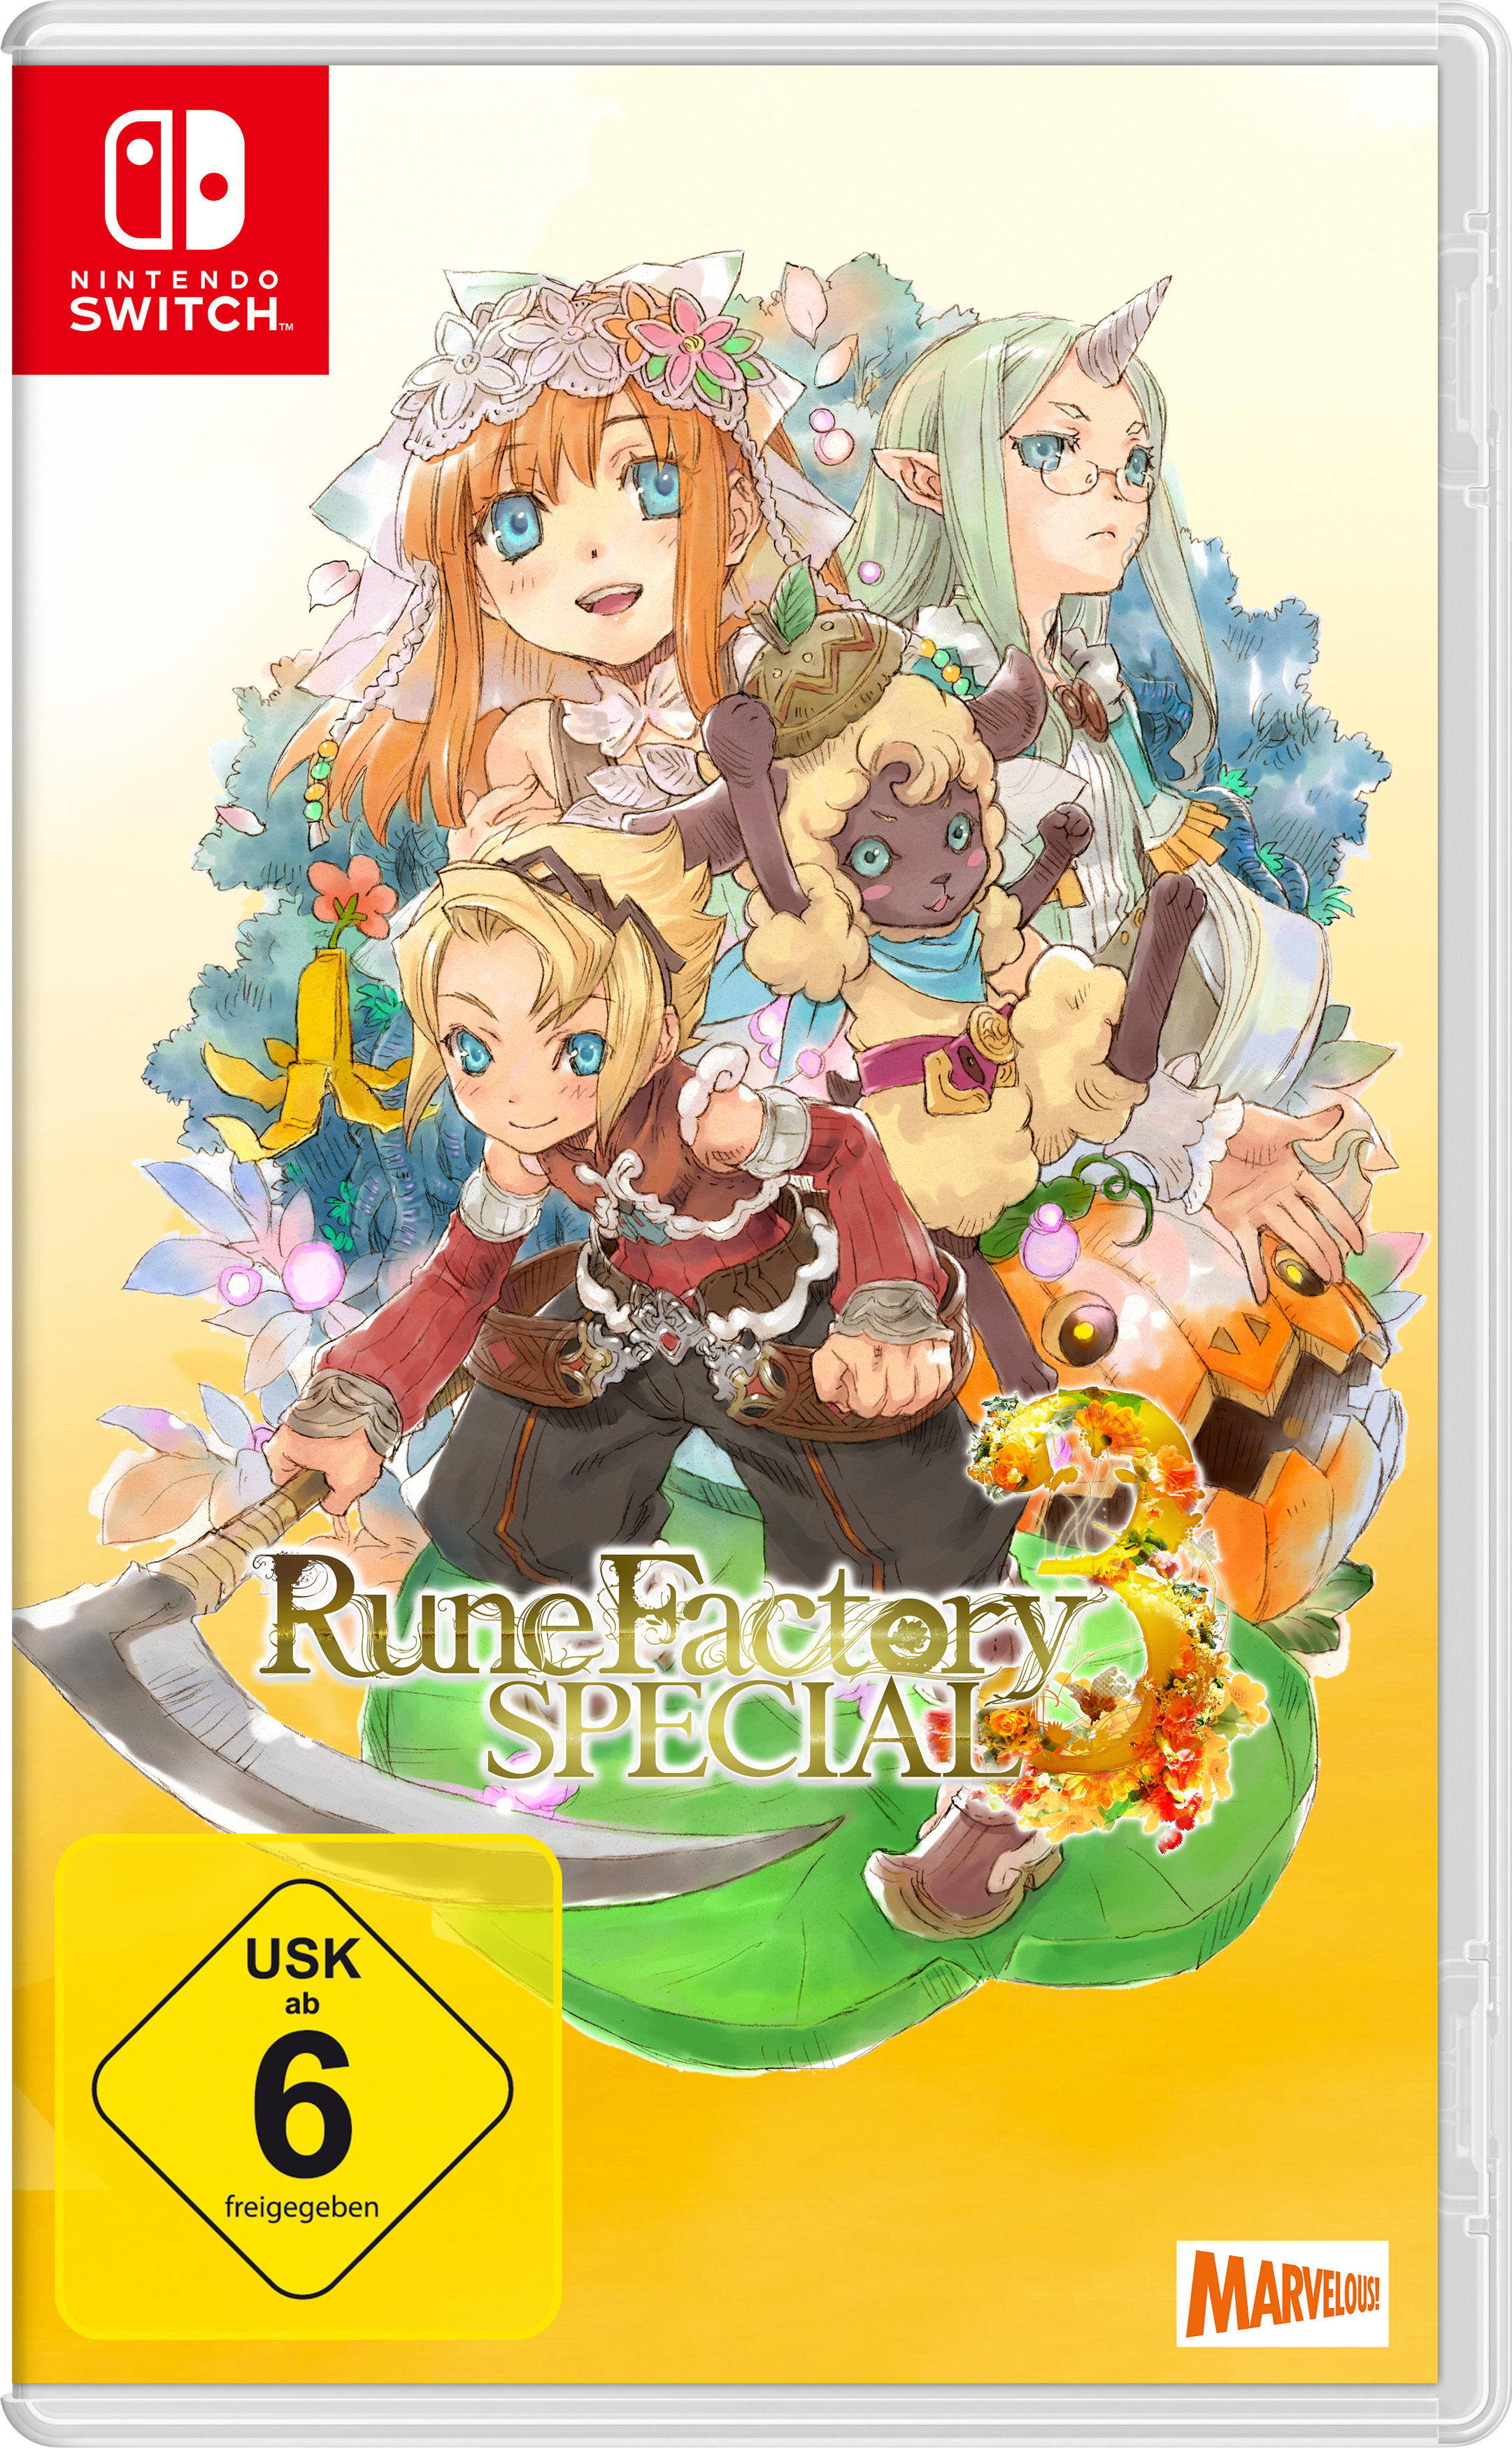 Rune Factory 3 Special